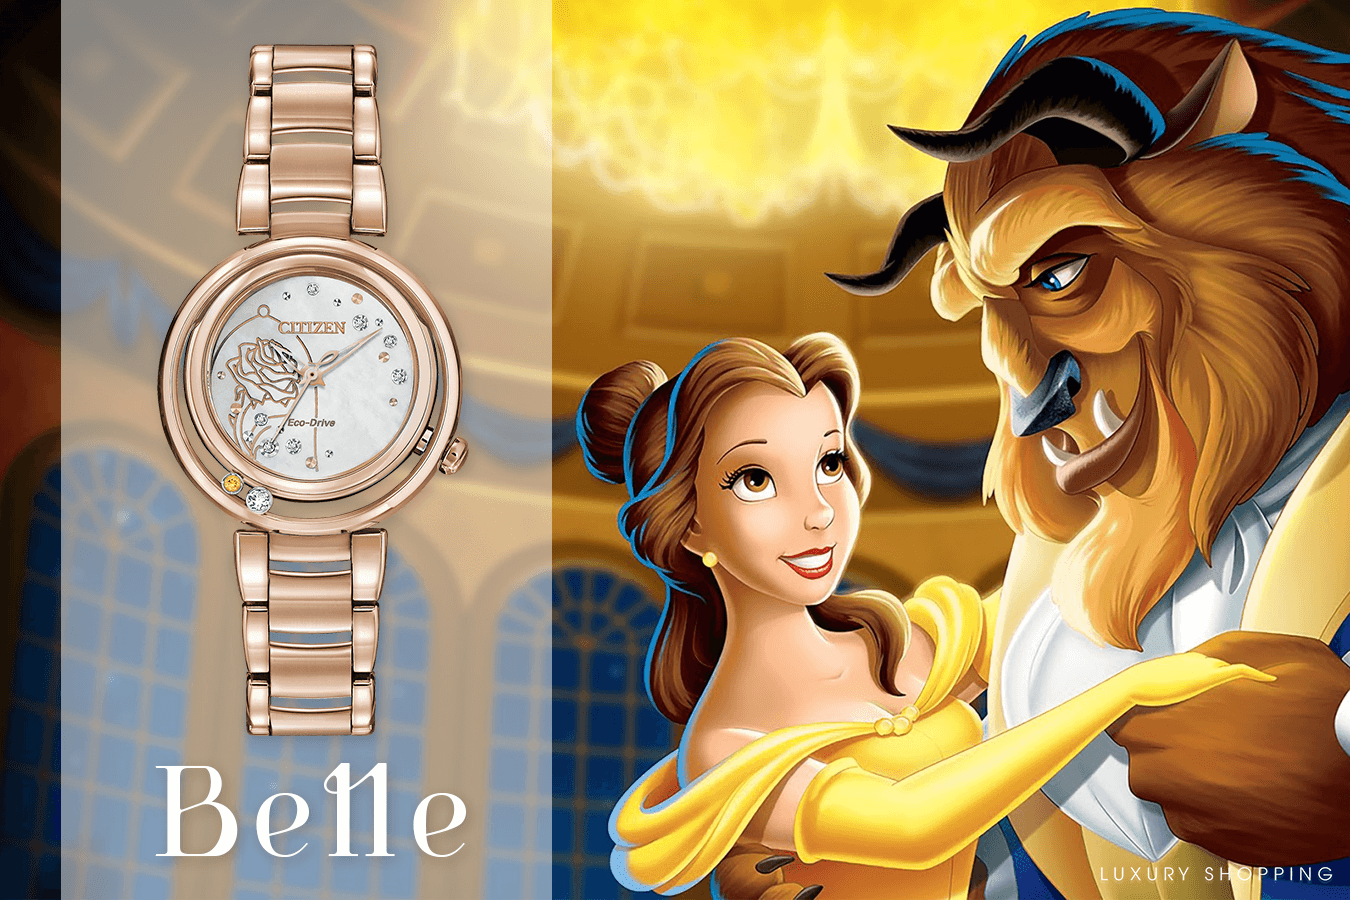 Citizen Disney Princess Diamond - Belle (Beauty and the Beast)